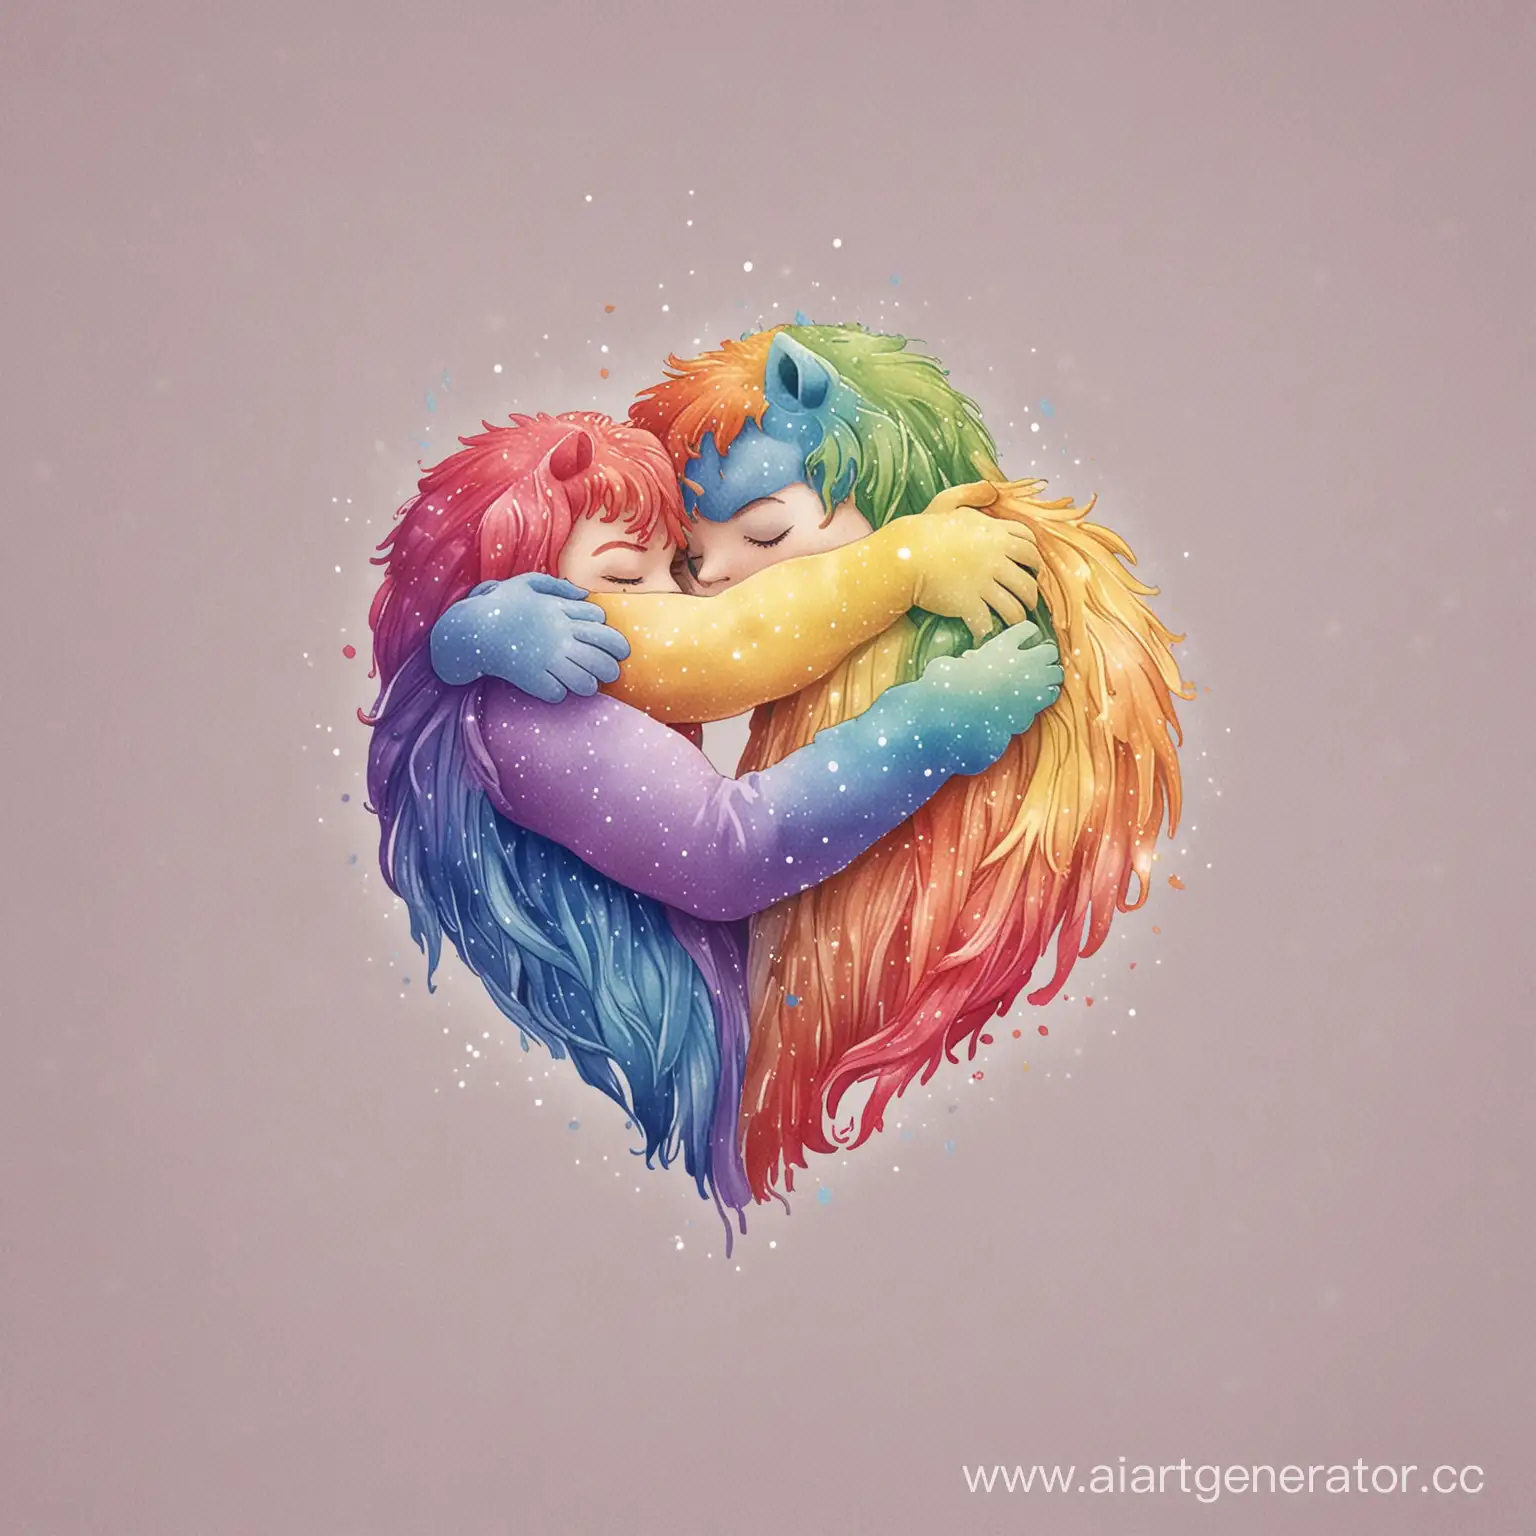 Colorful-Rainbow-Hugs-Joyful-Embrace-of-Vibrant-Affection